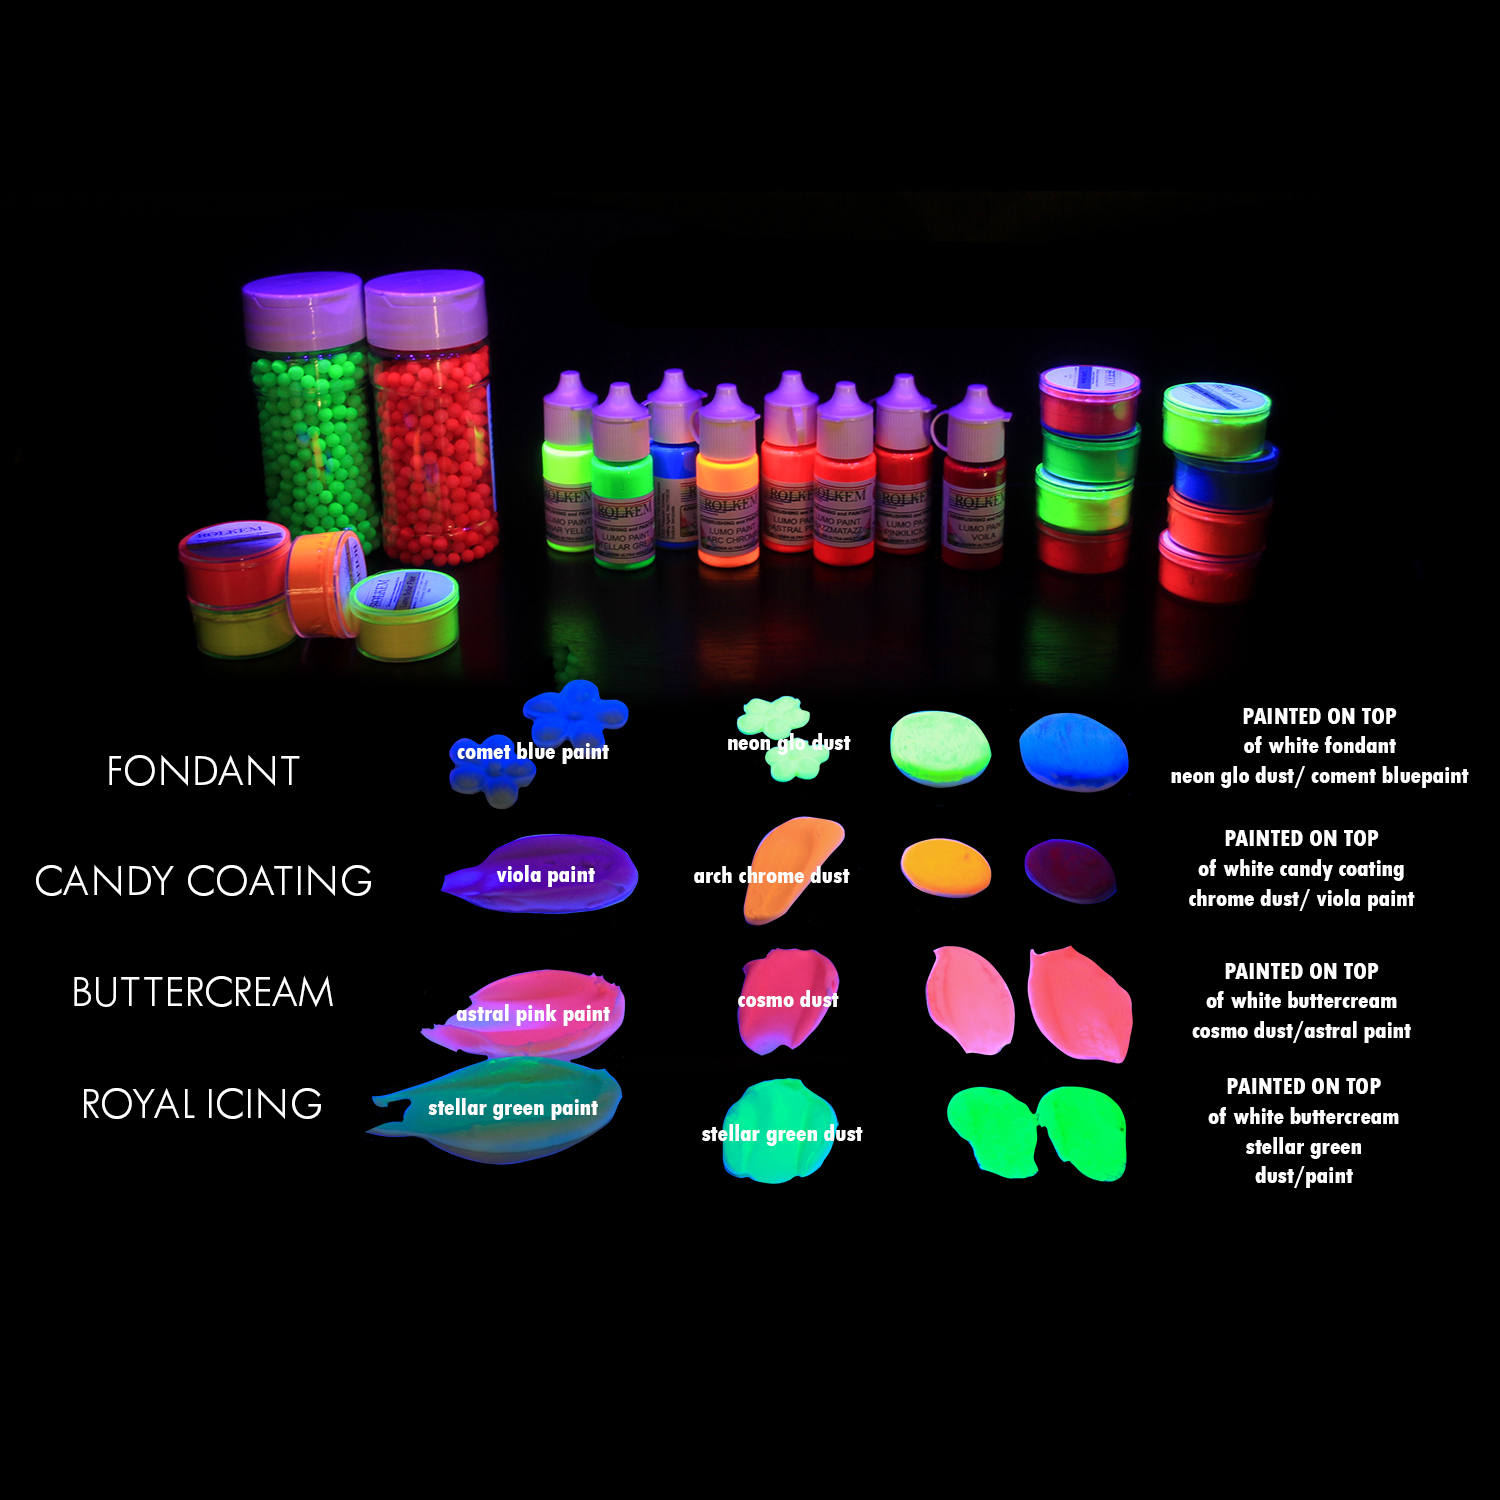 different items using Rolkem that glow under blacklight